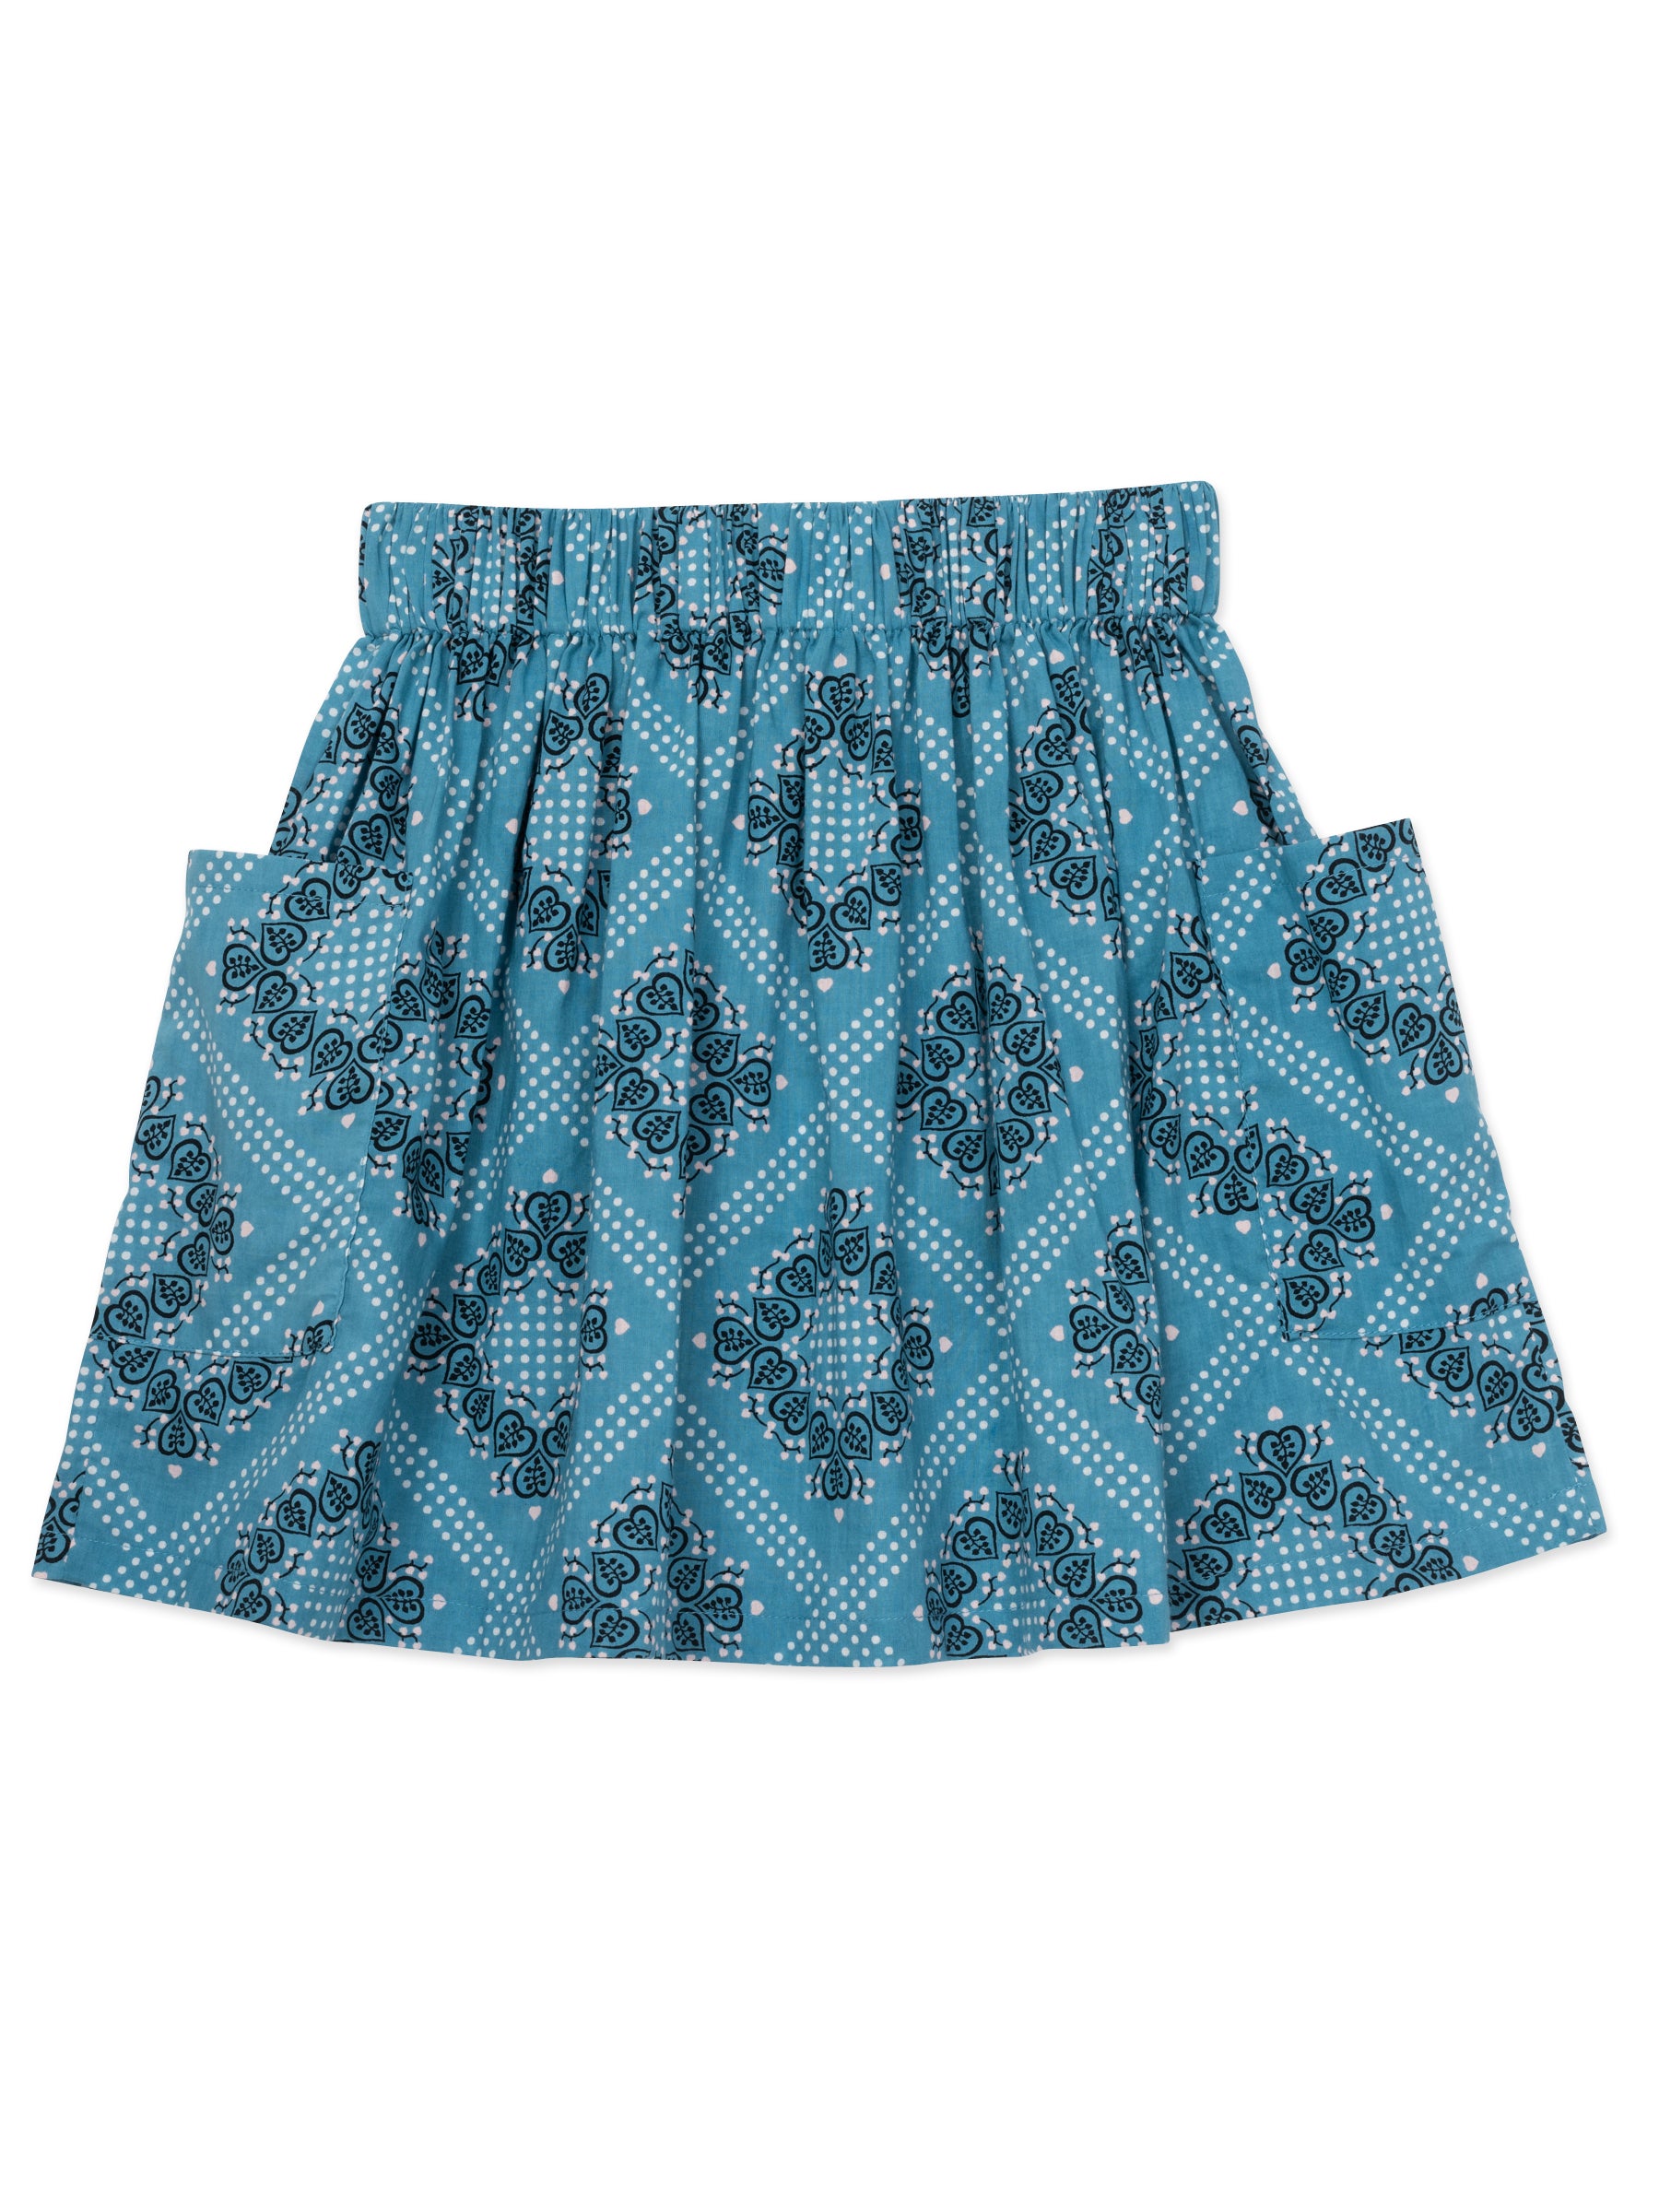 Girls Blue Printing Cotton Skirt